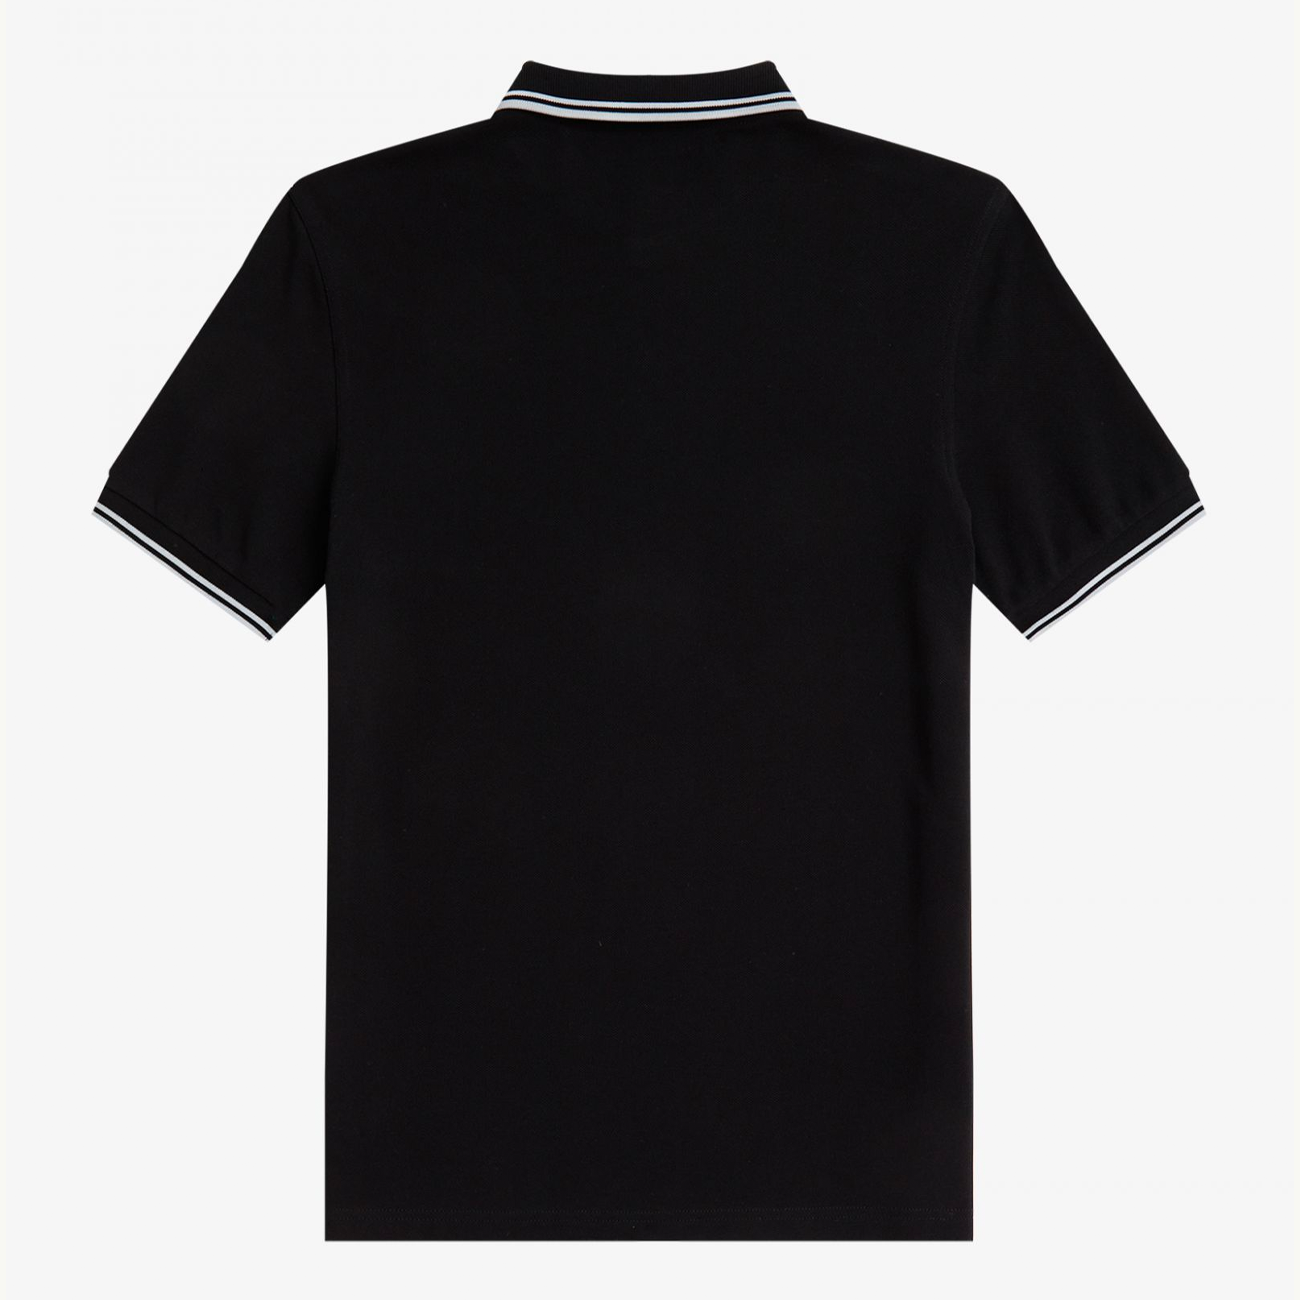 Twin Tipped Shirt - Black/White